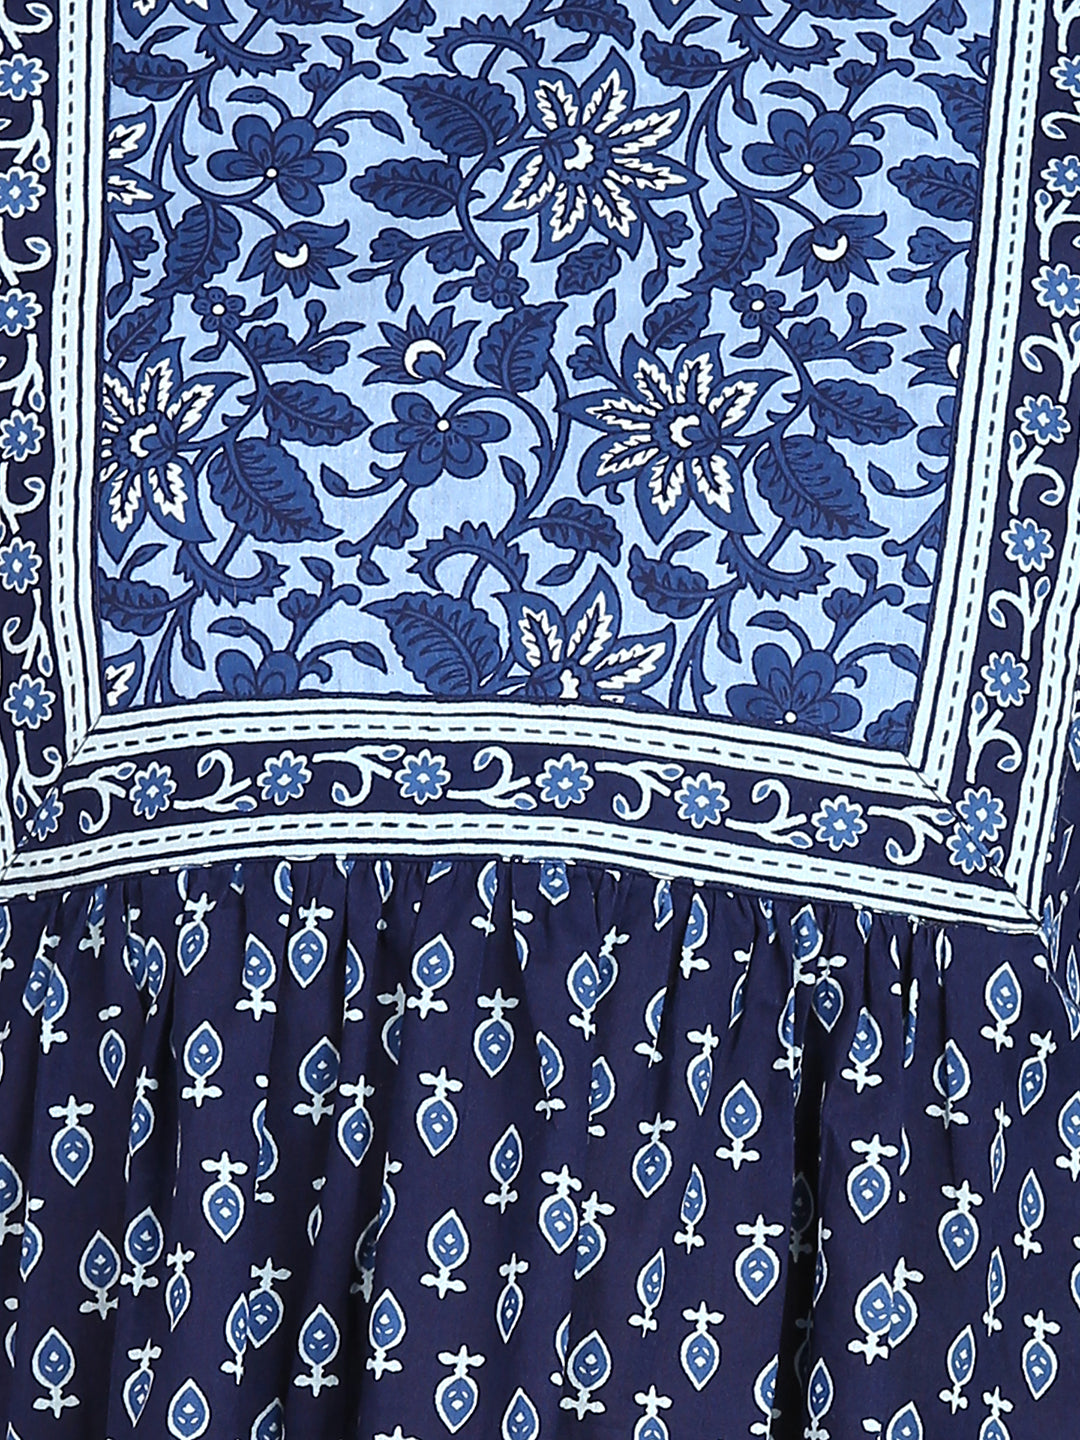 Indigo Blue Floral Printed Top